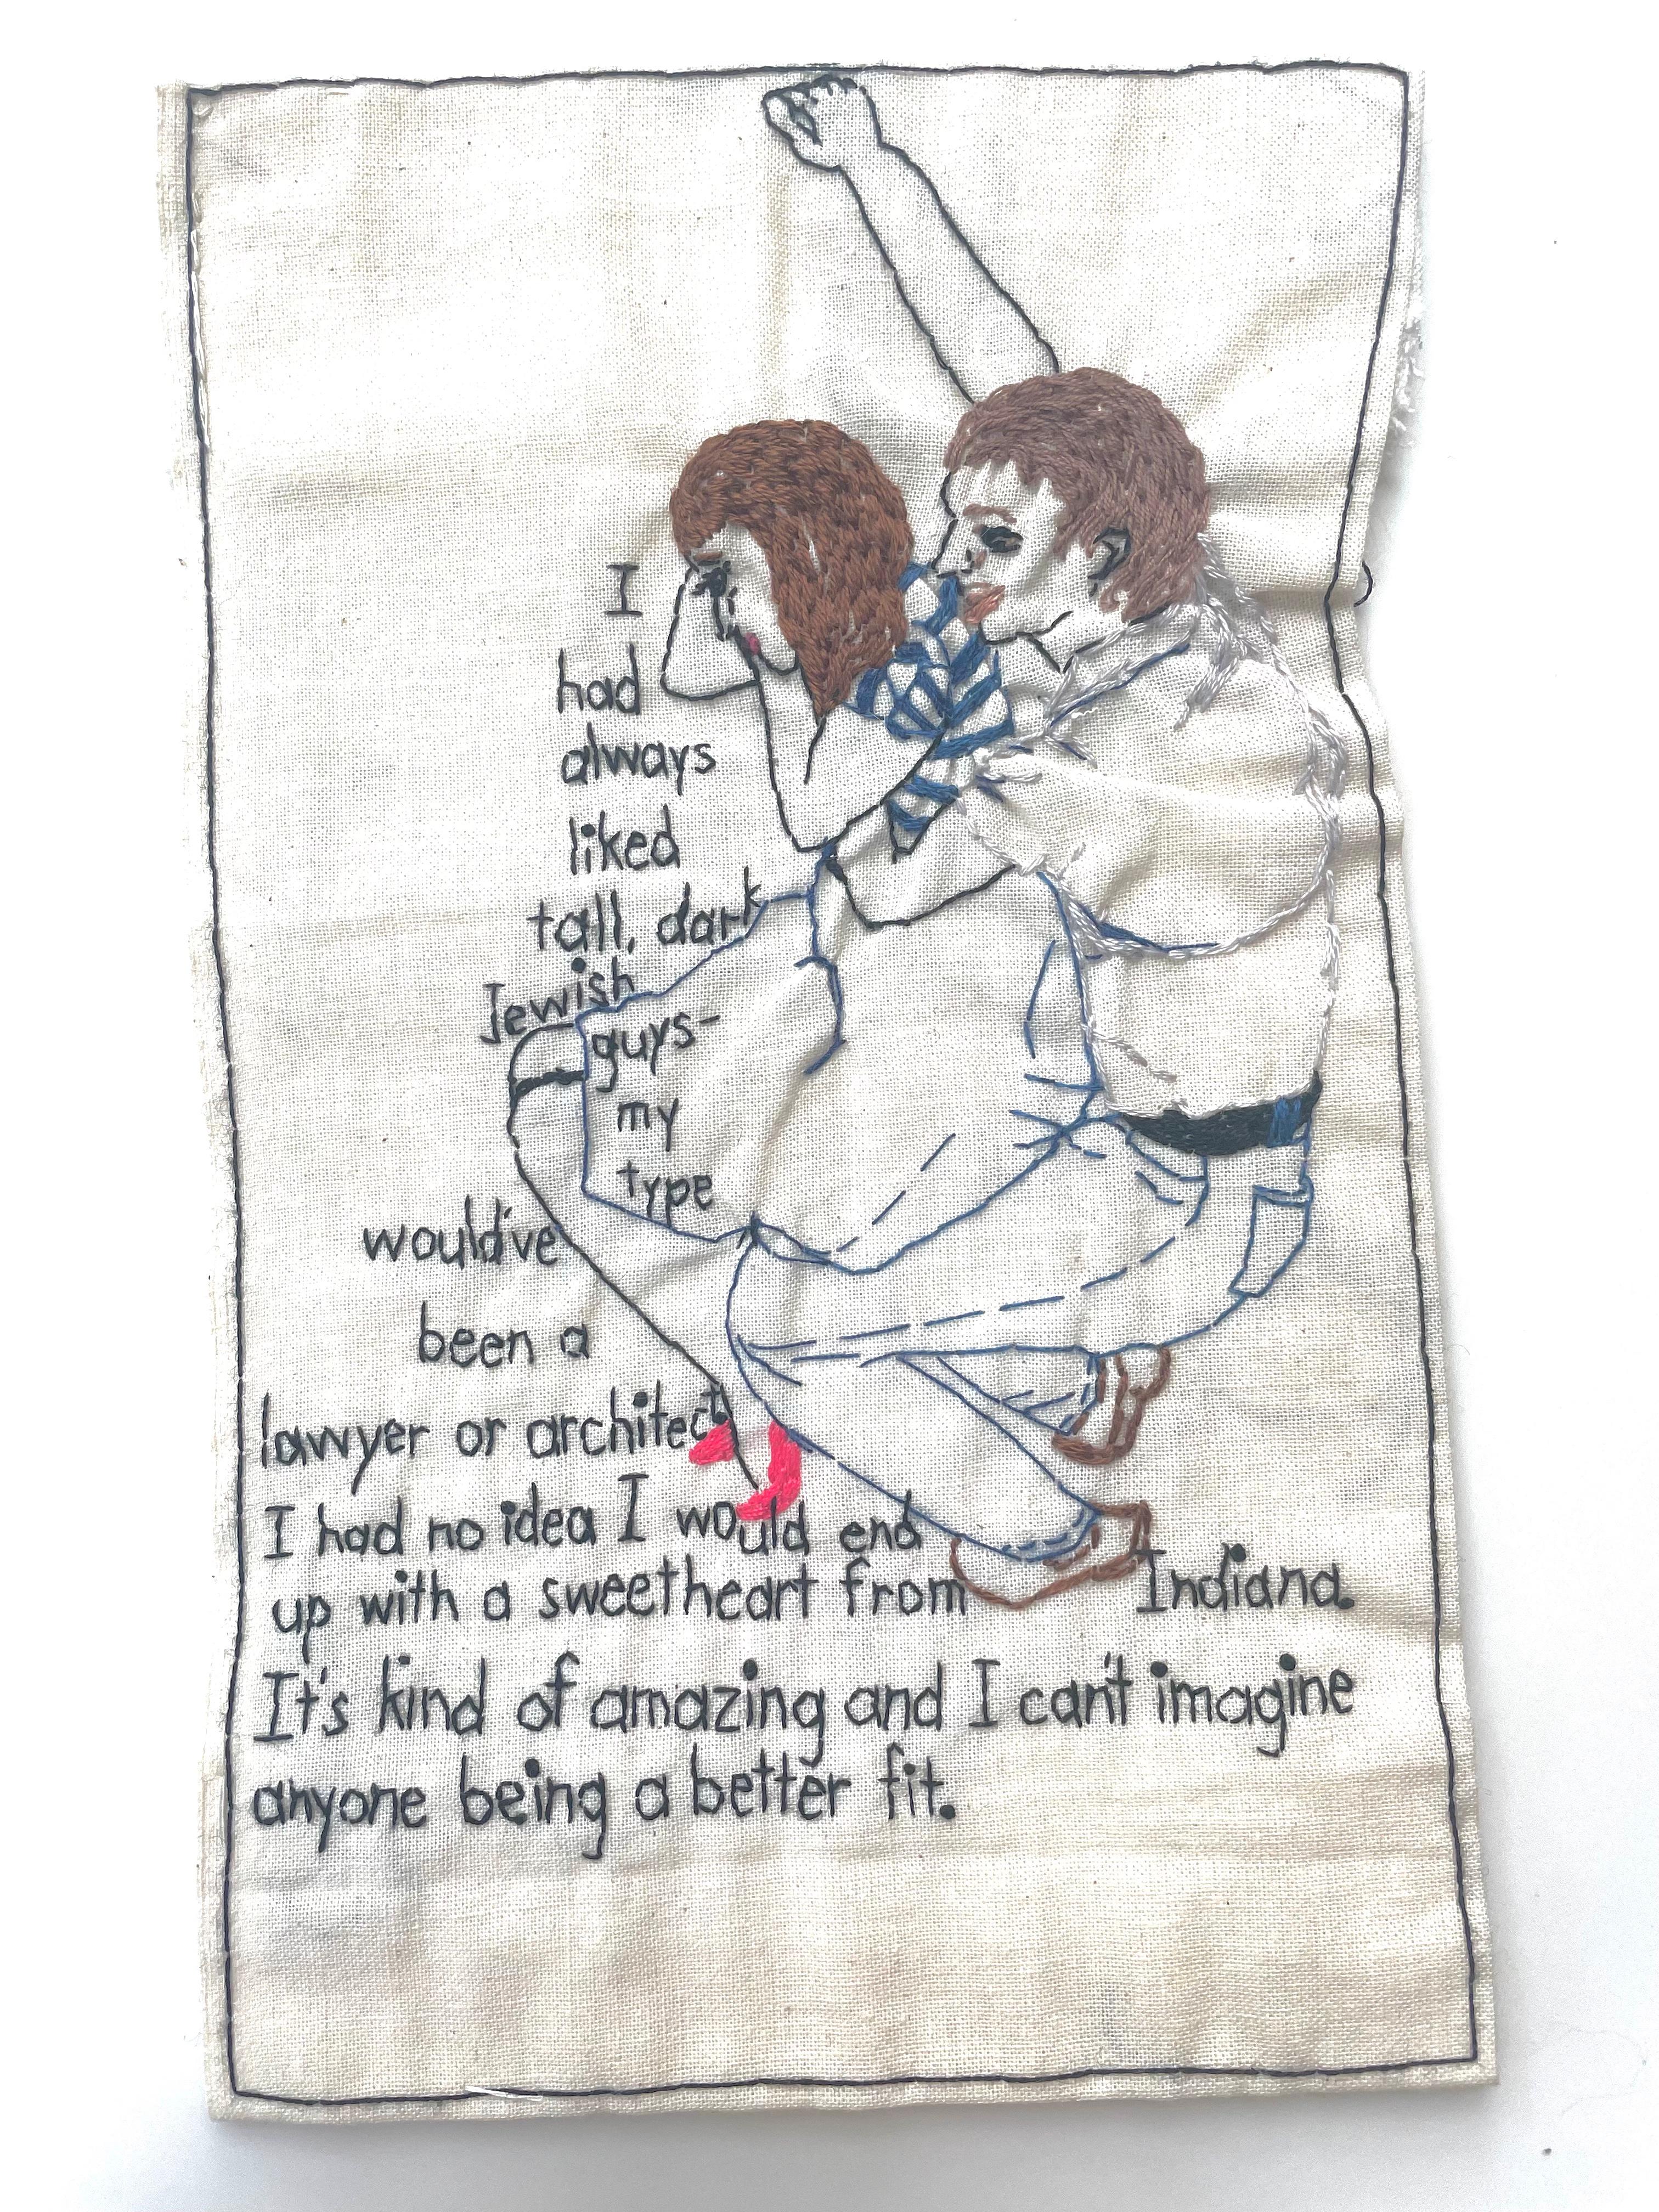 I always liked Jewish guys - narrative love couple  embroidery on fabric - Mixed Media Art by Iviva Olenick